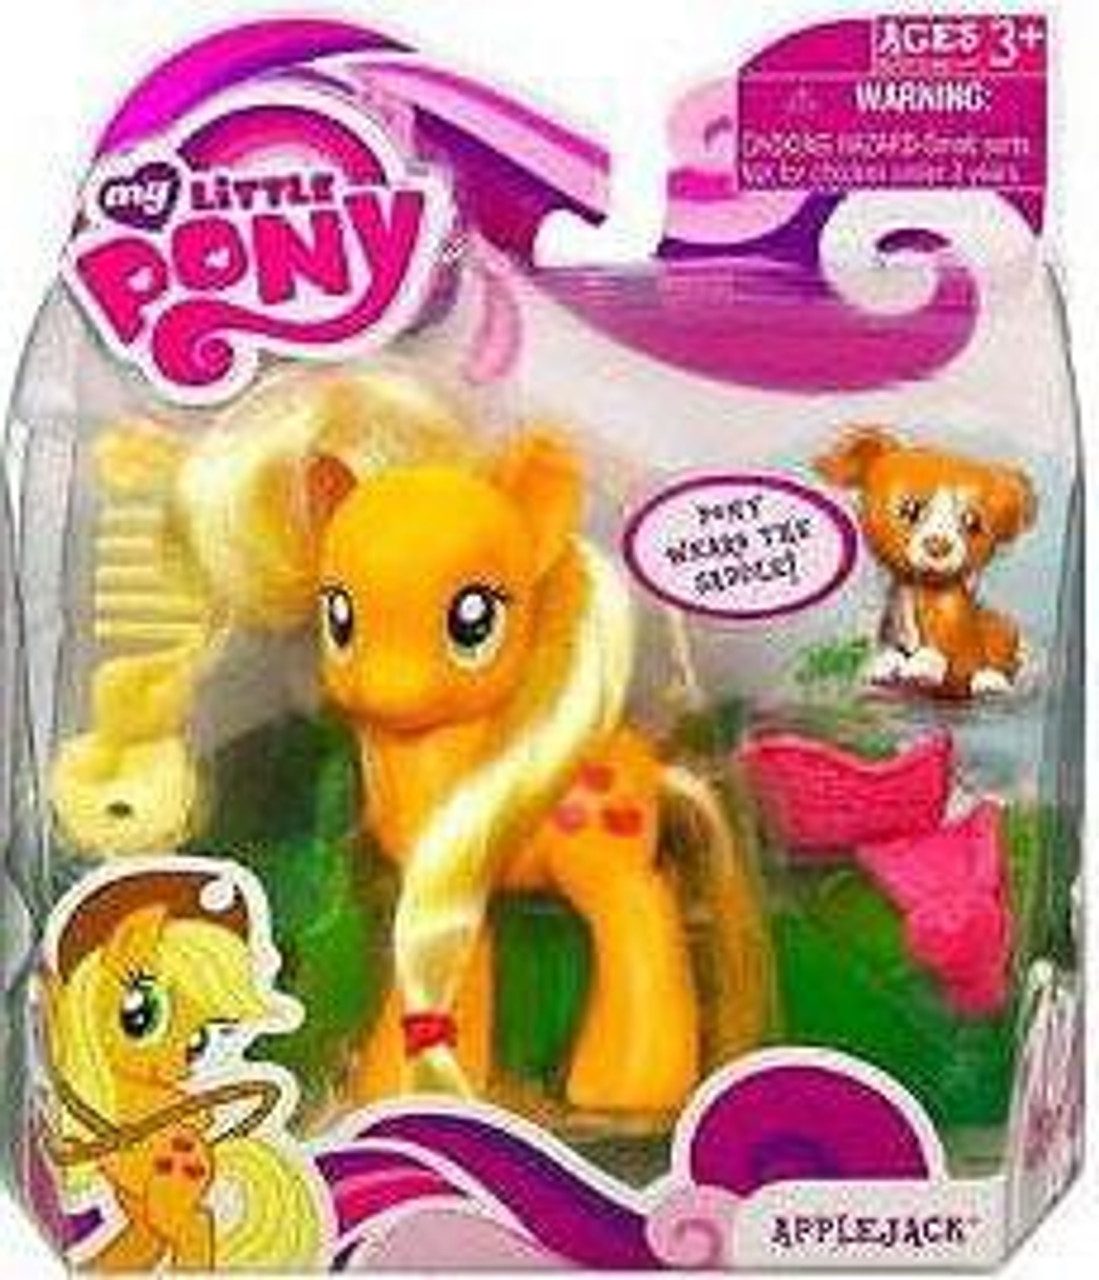 my little pony applejack toy